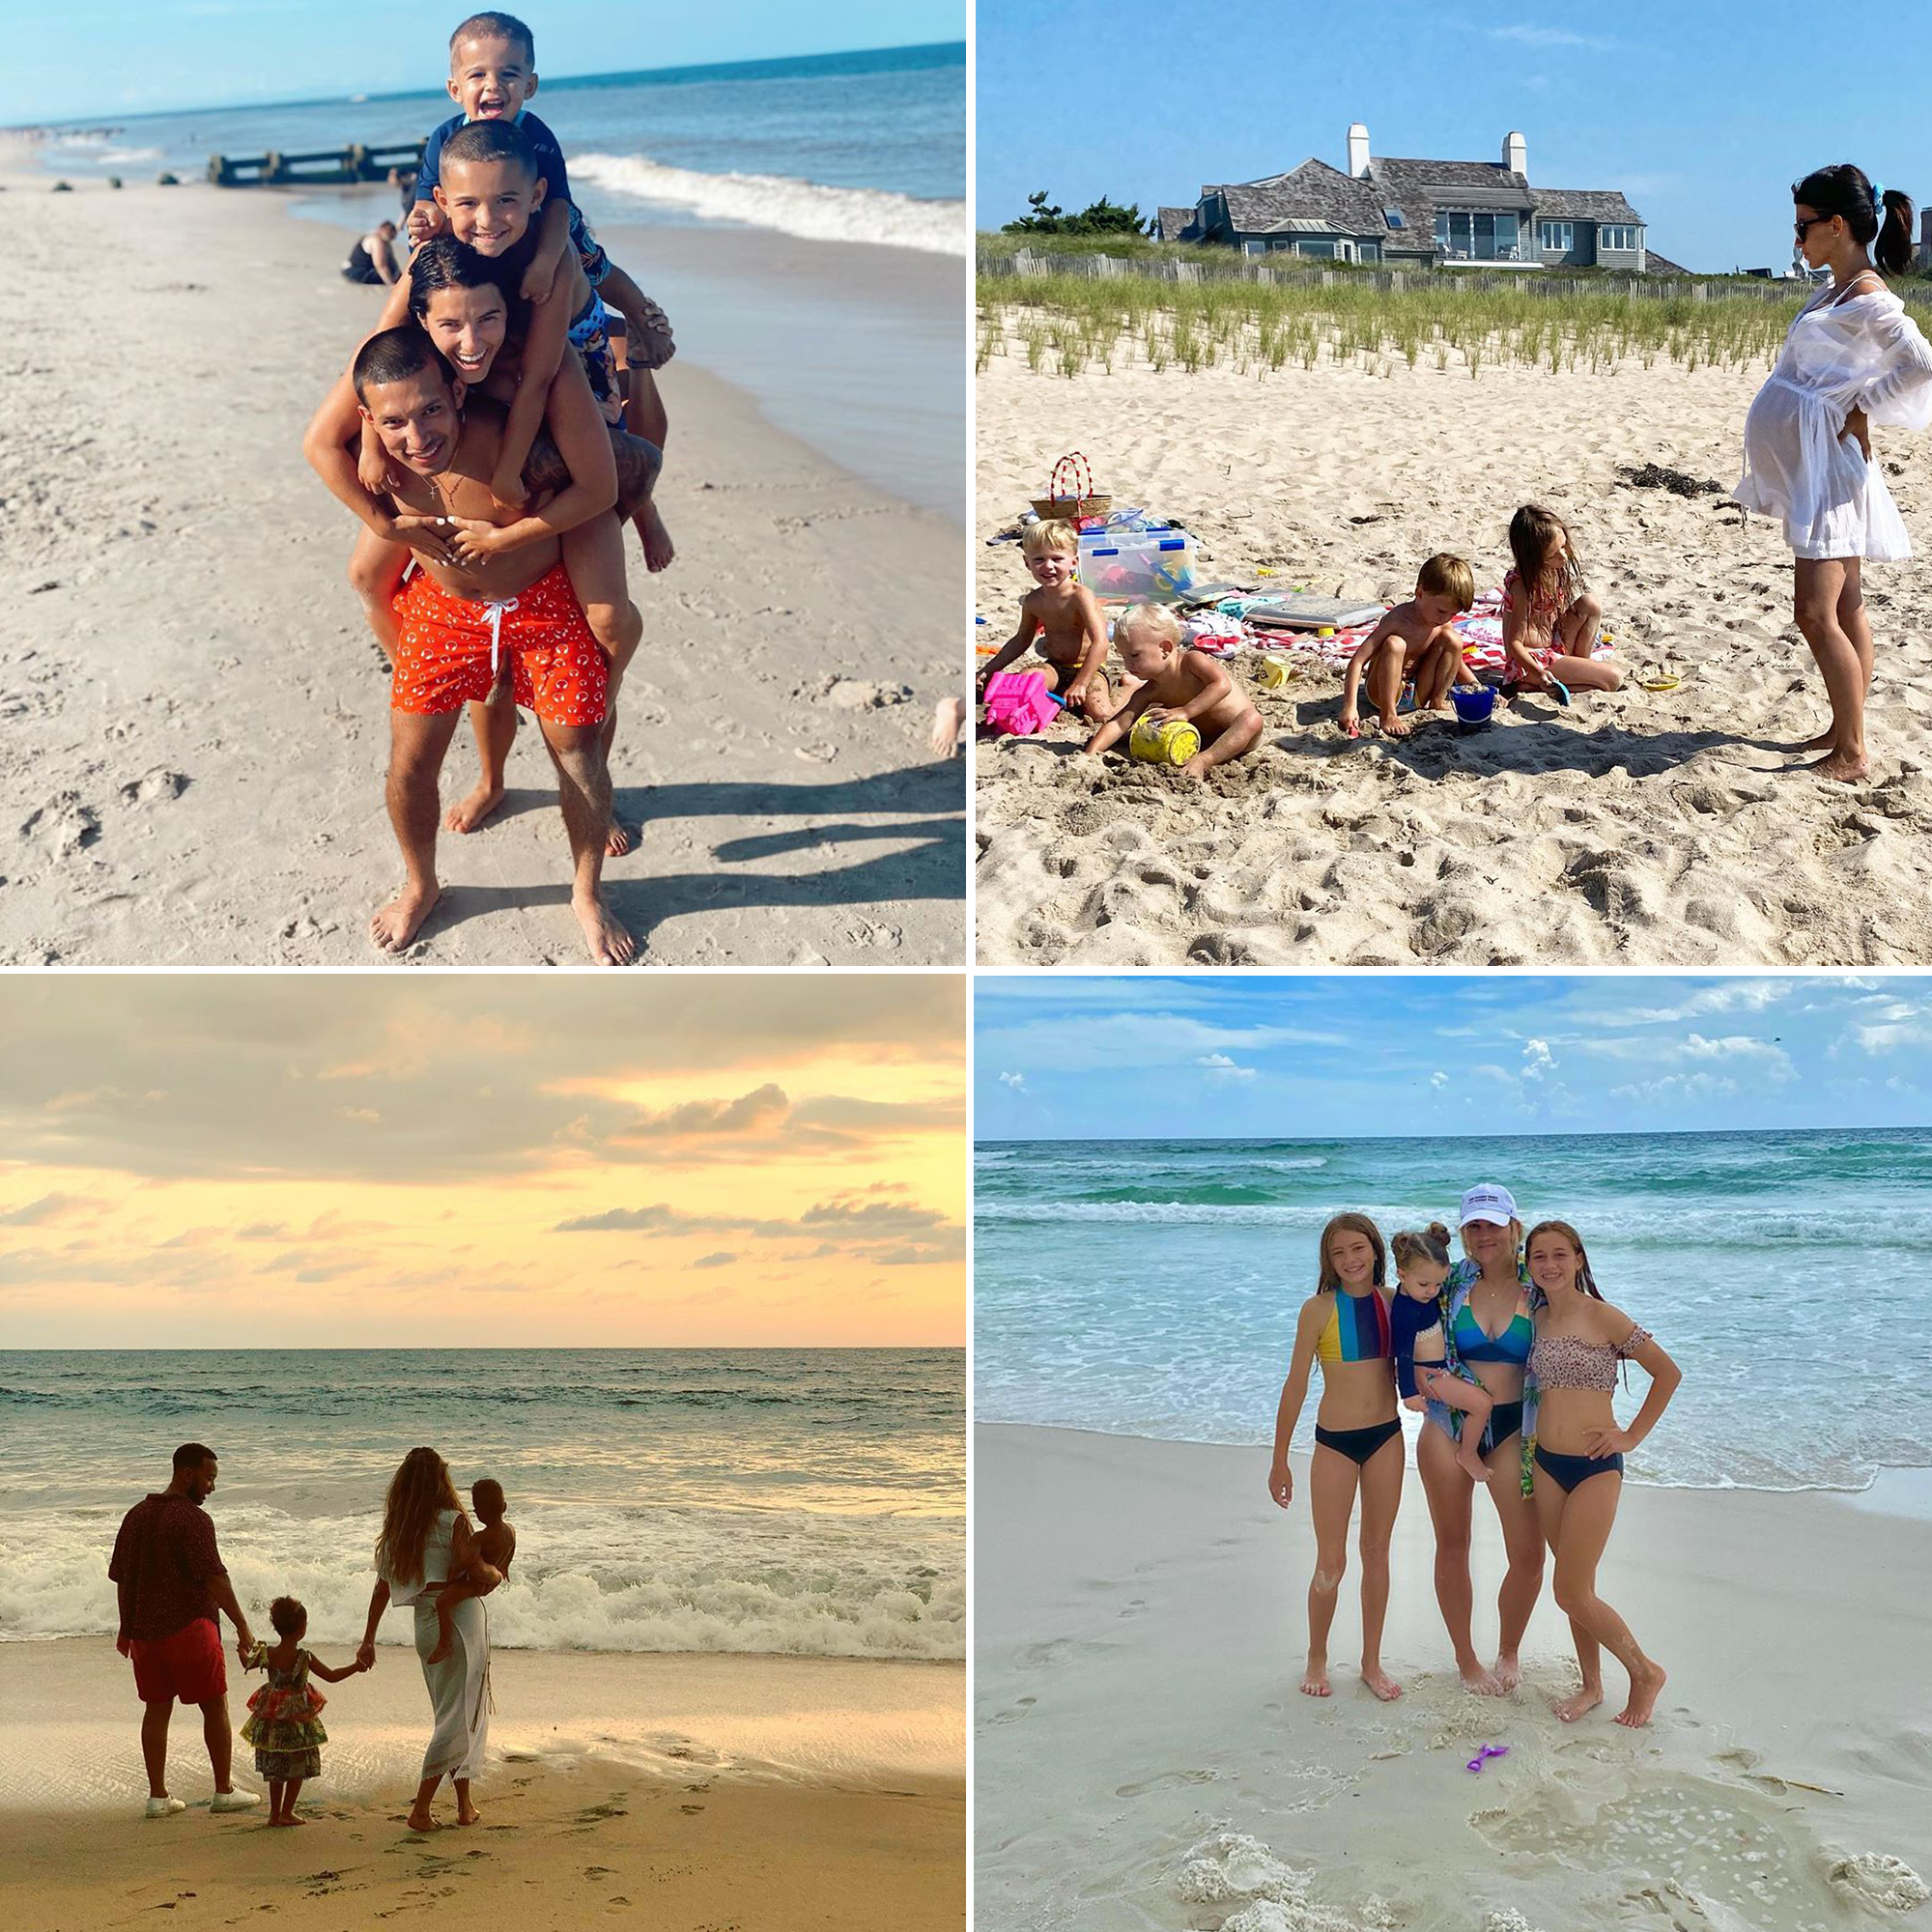 Nudist Beach Fashion Show - Celeb Families' Beach Trips Amid Coronavirus Pandemic: Pics